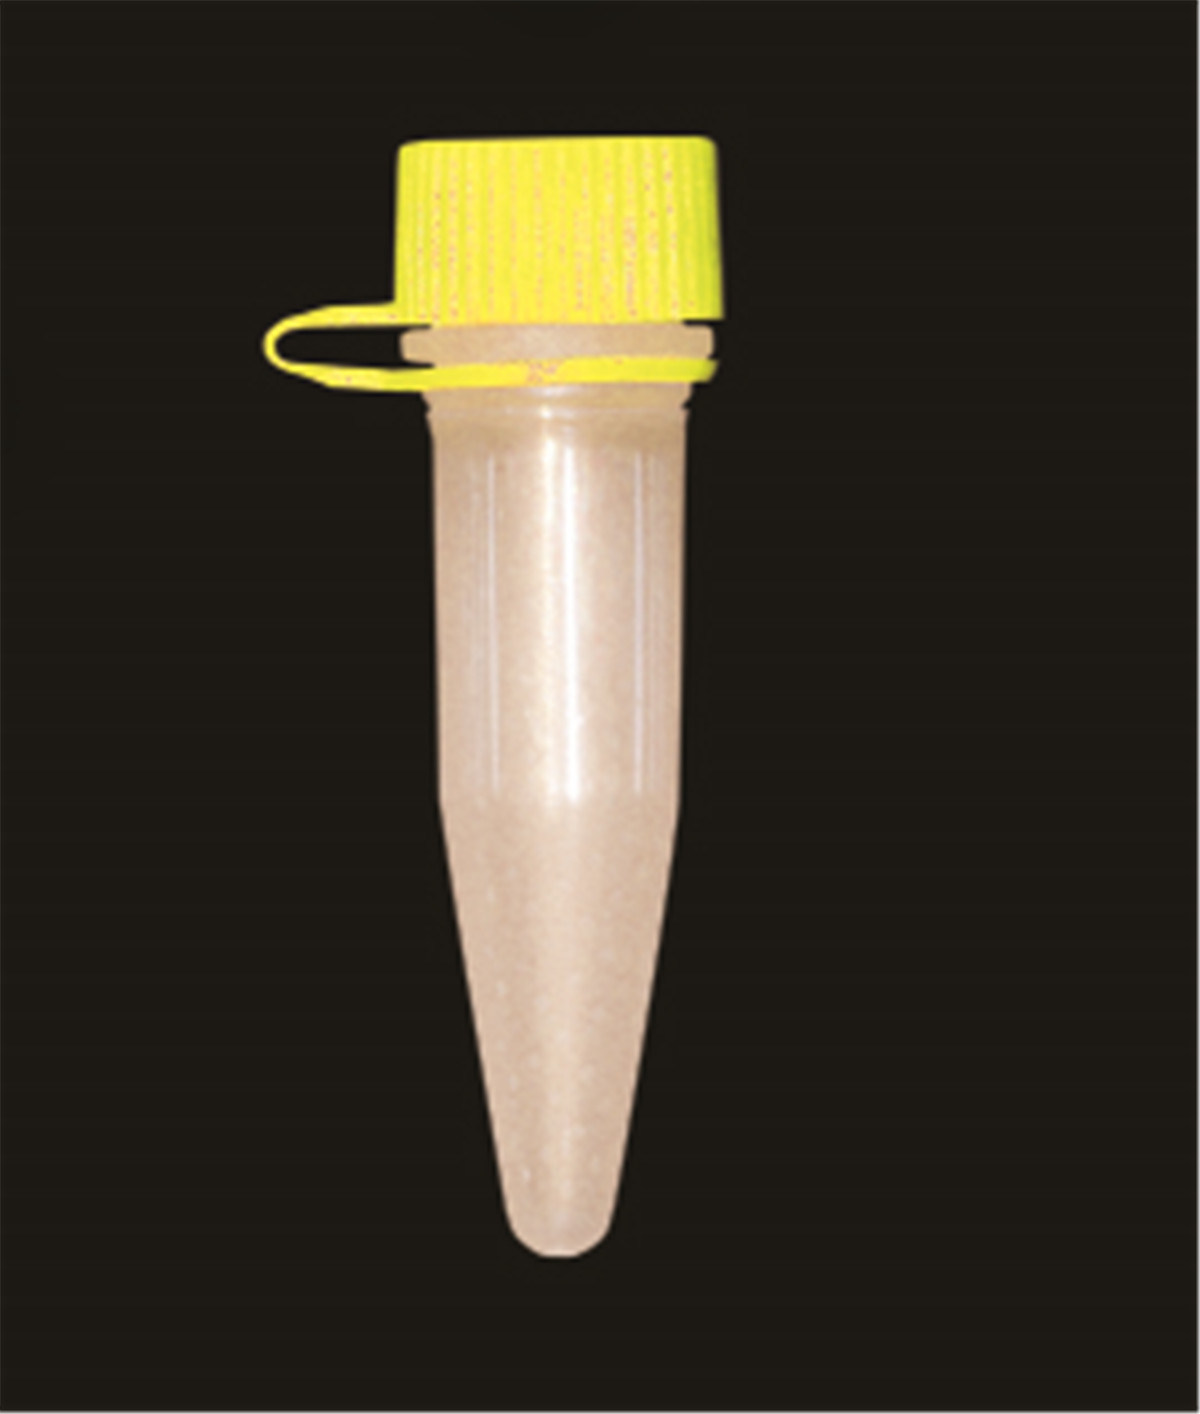 Micro-Centrifuge Plastic Tube with Yellow Cap